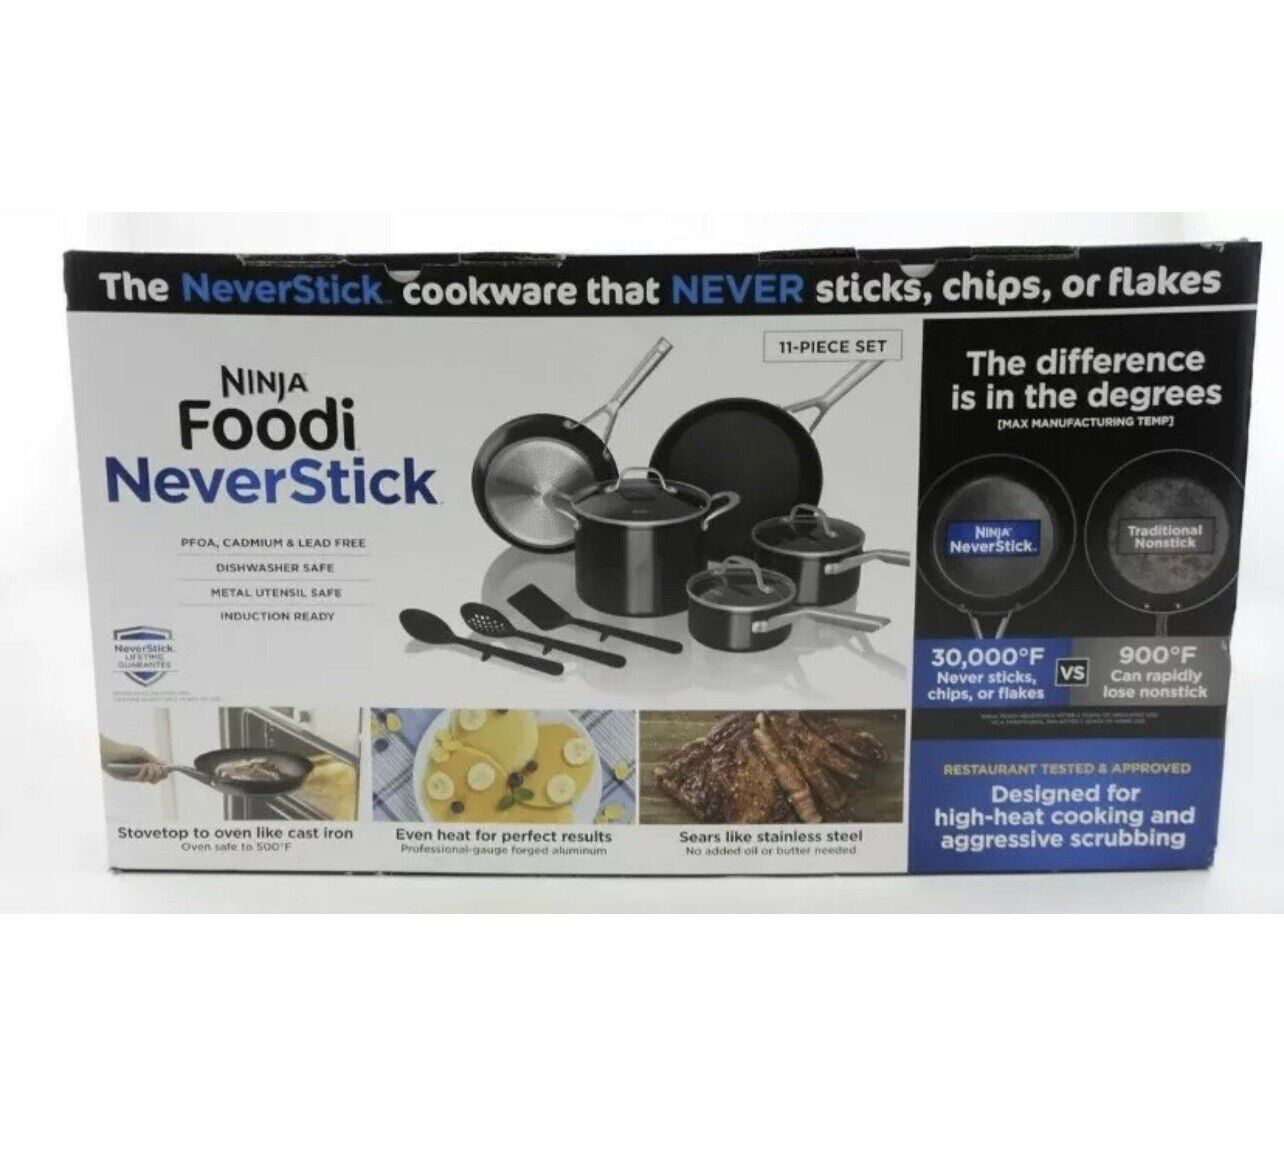 Ninja C19600 Foodi Neverstick Cookware Set - 11 Piece for sale online